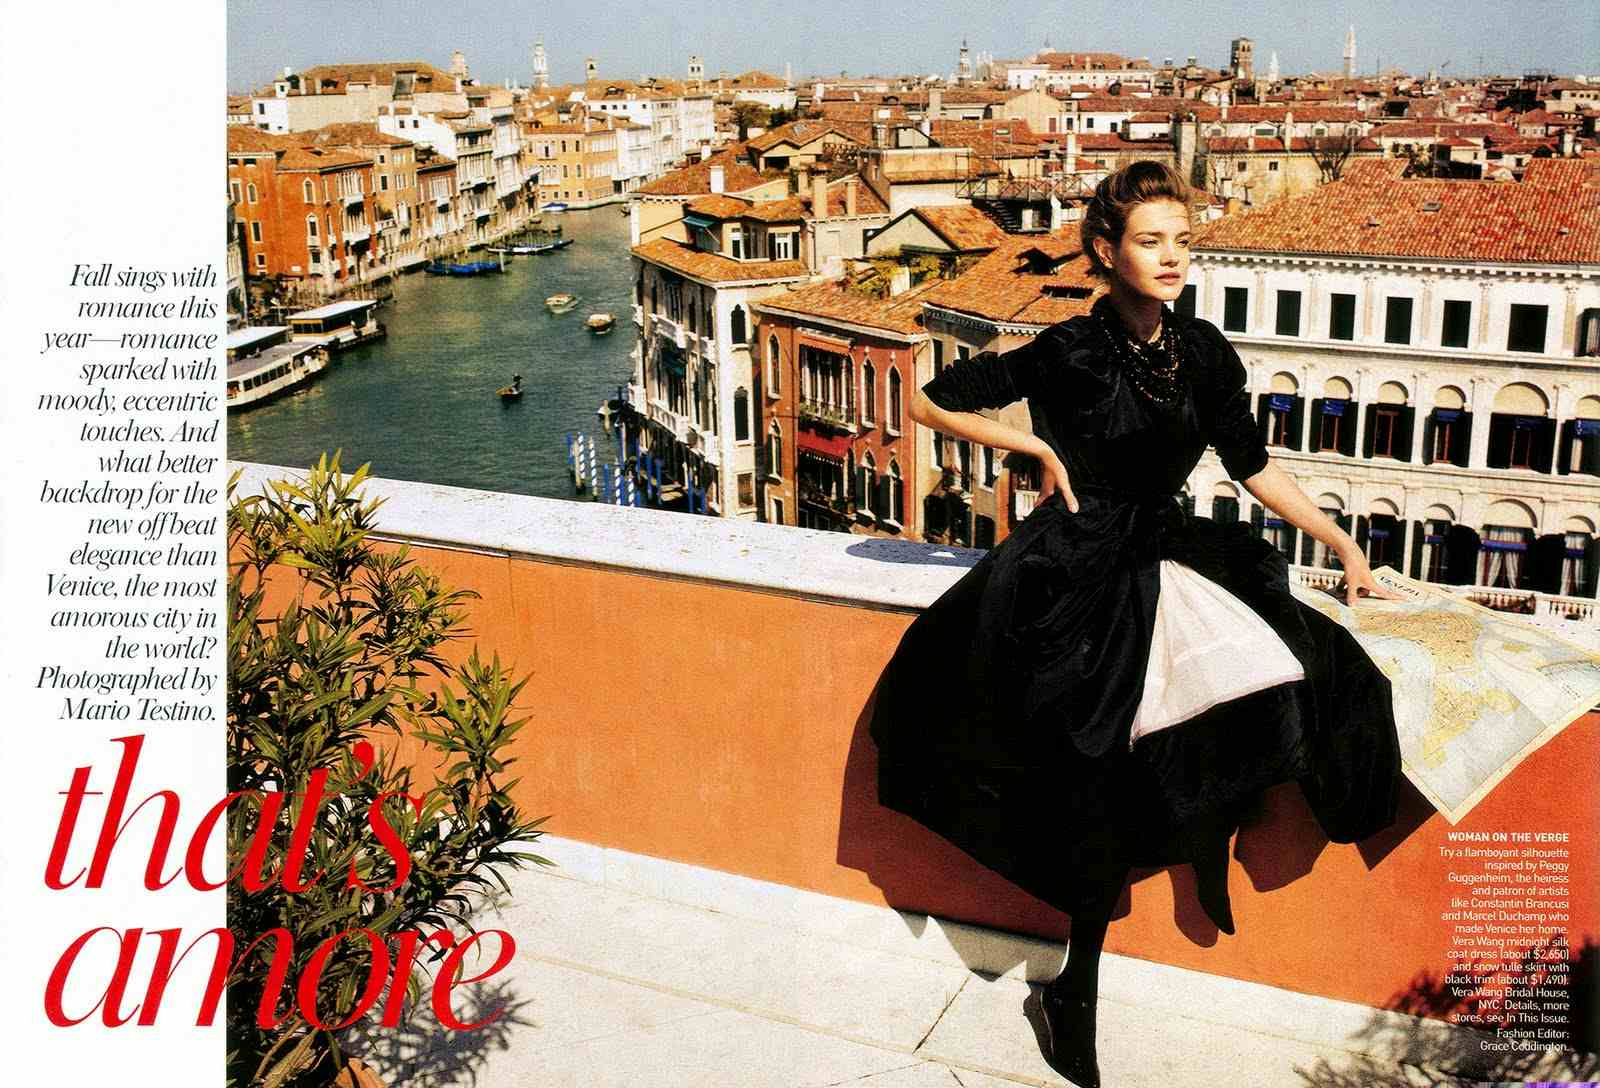 VOGUE USA - 2005
Photographer: Mario Testino
Model: Natalia Vodianova
Stylist: Grace Coddington
Location: Venice - Italy